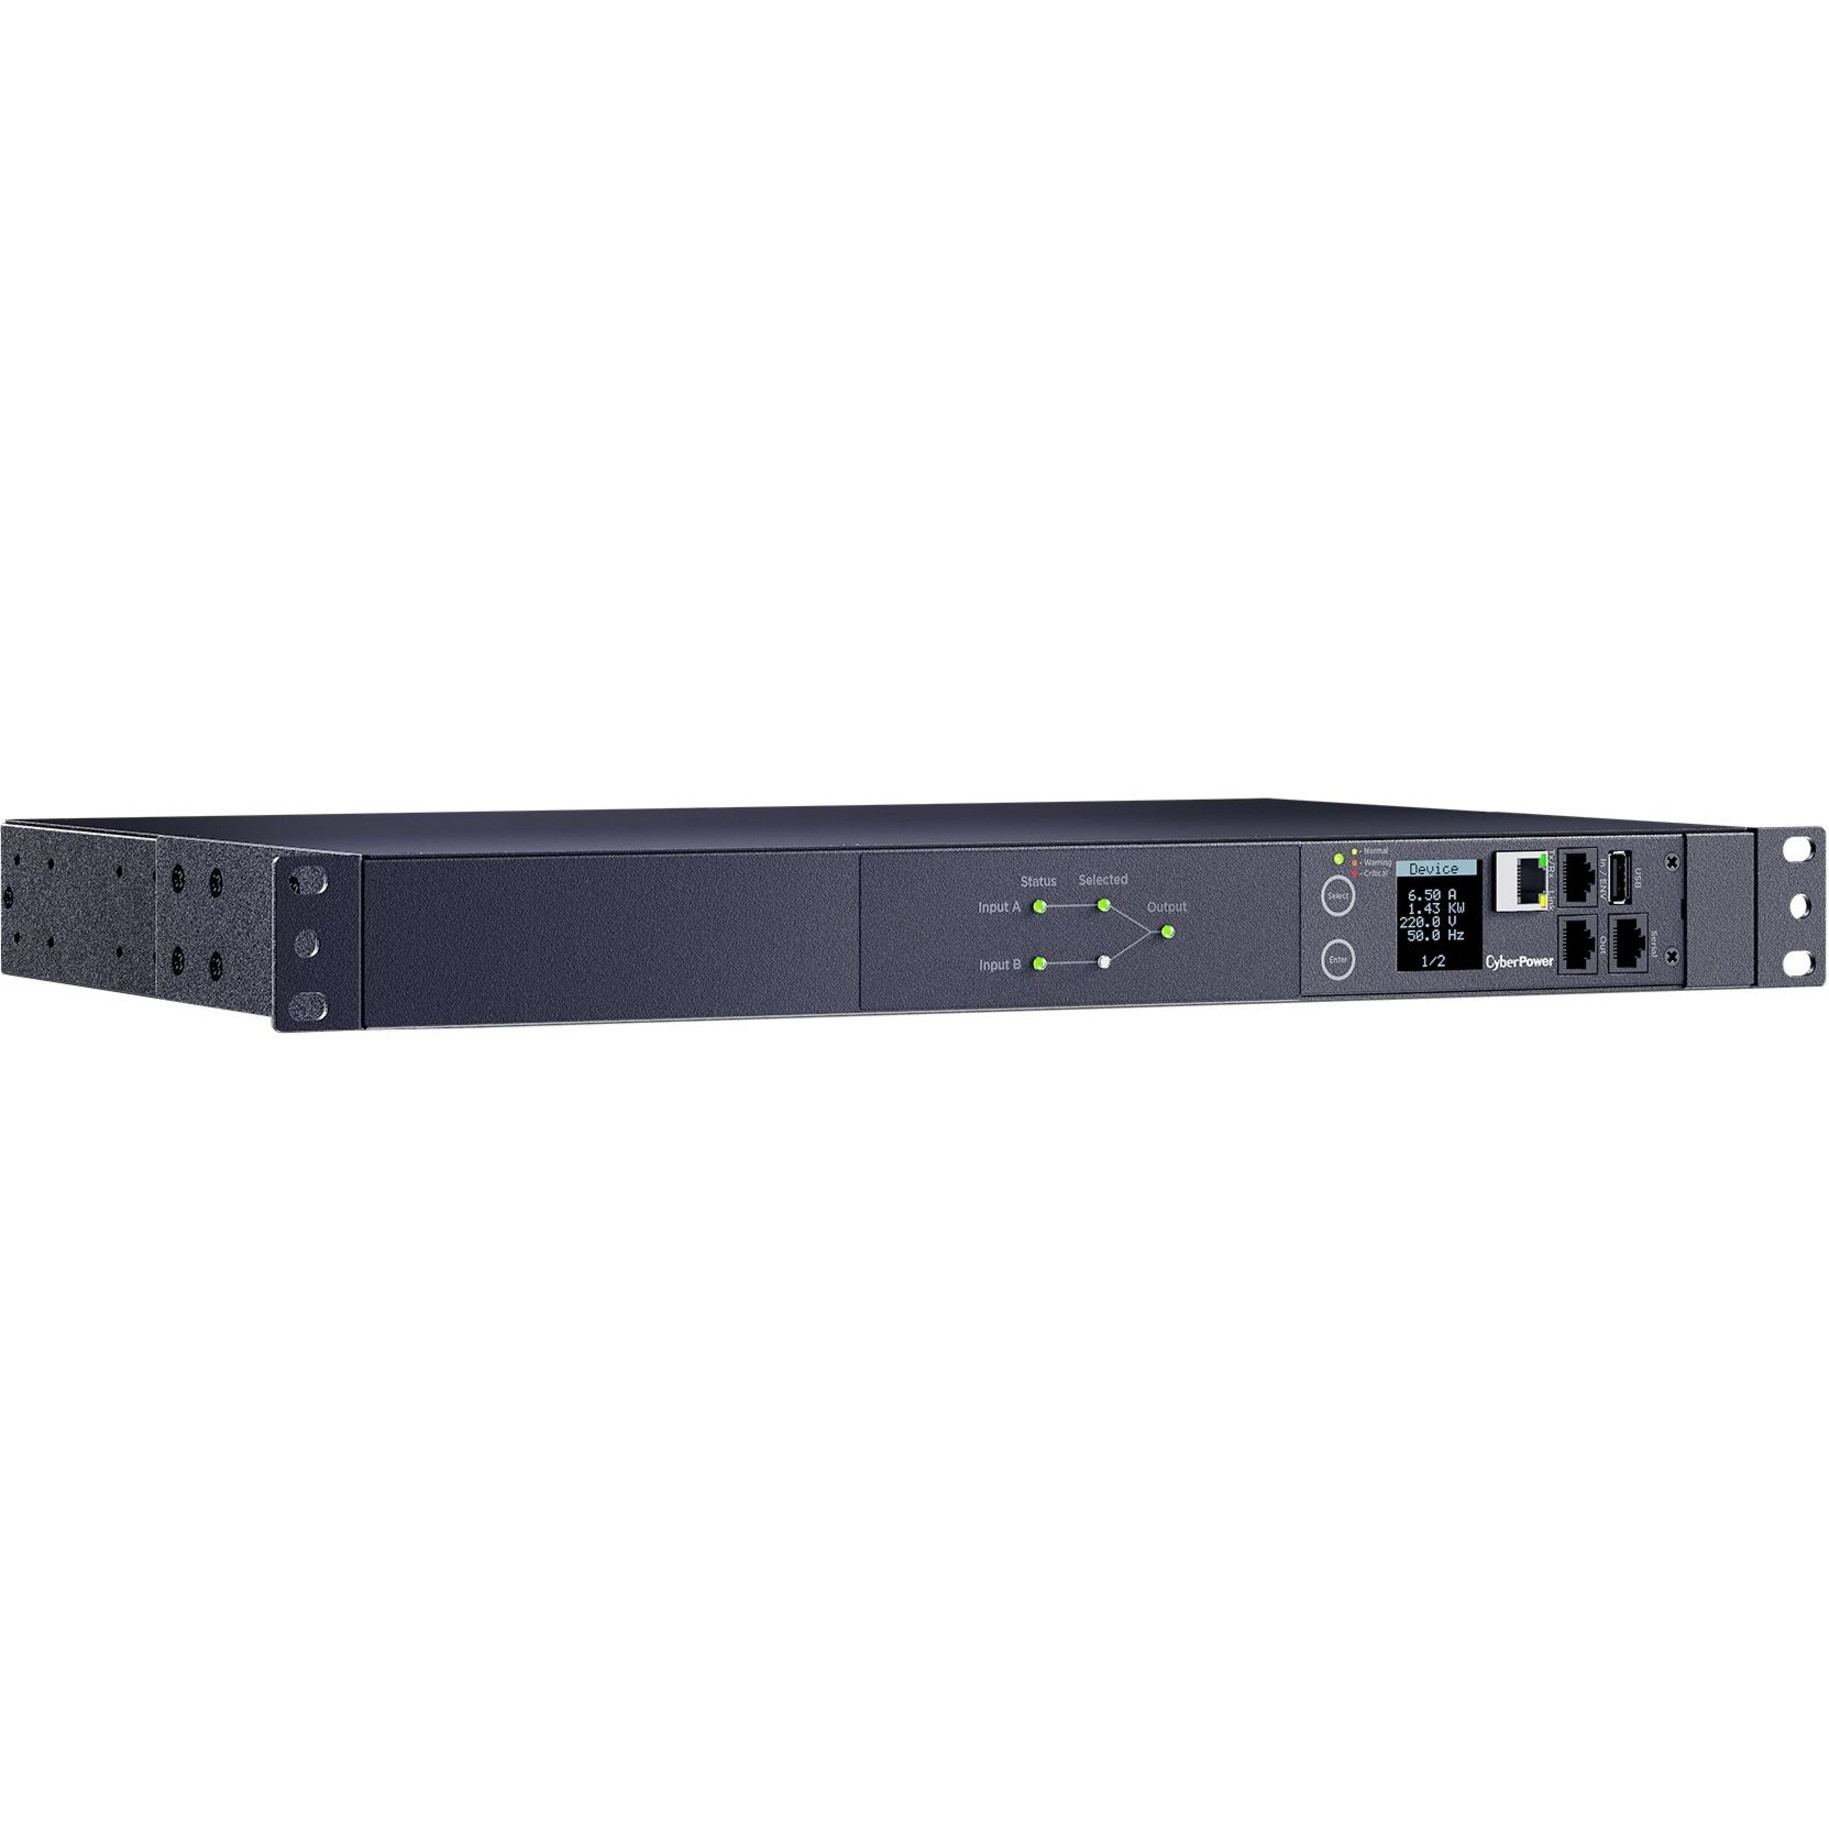 CyberPower PDU44006 ATS 10-Outlet PDU – Switched NEMA L6-20P